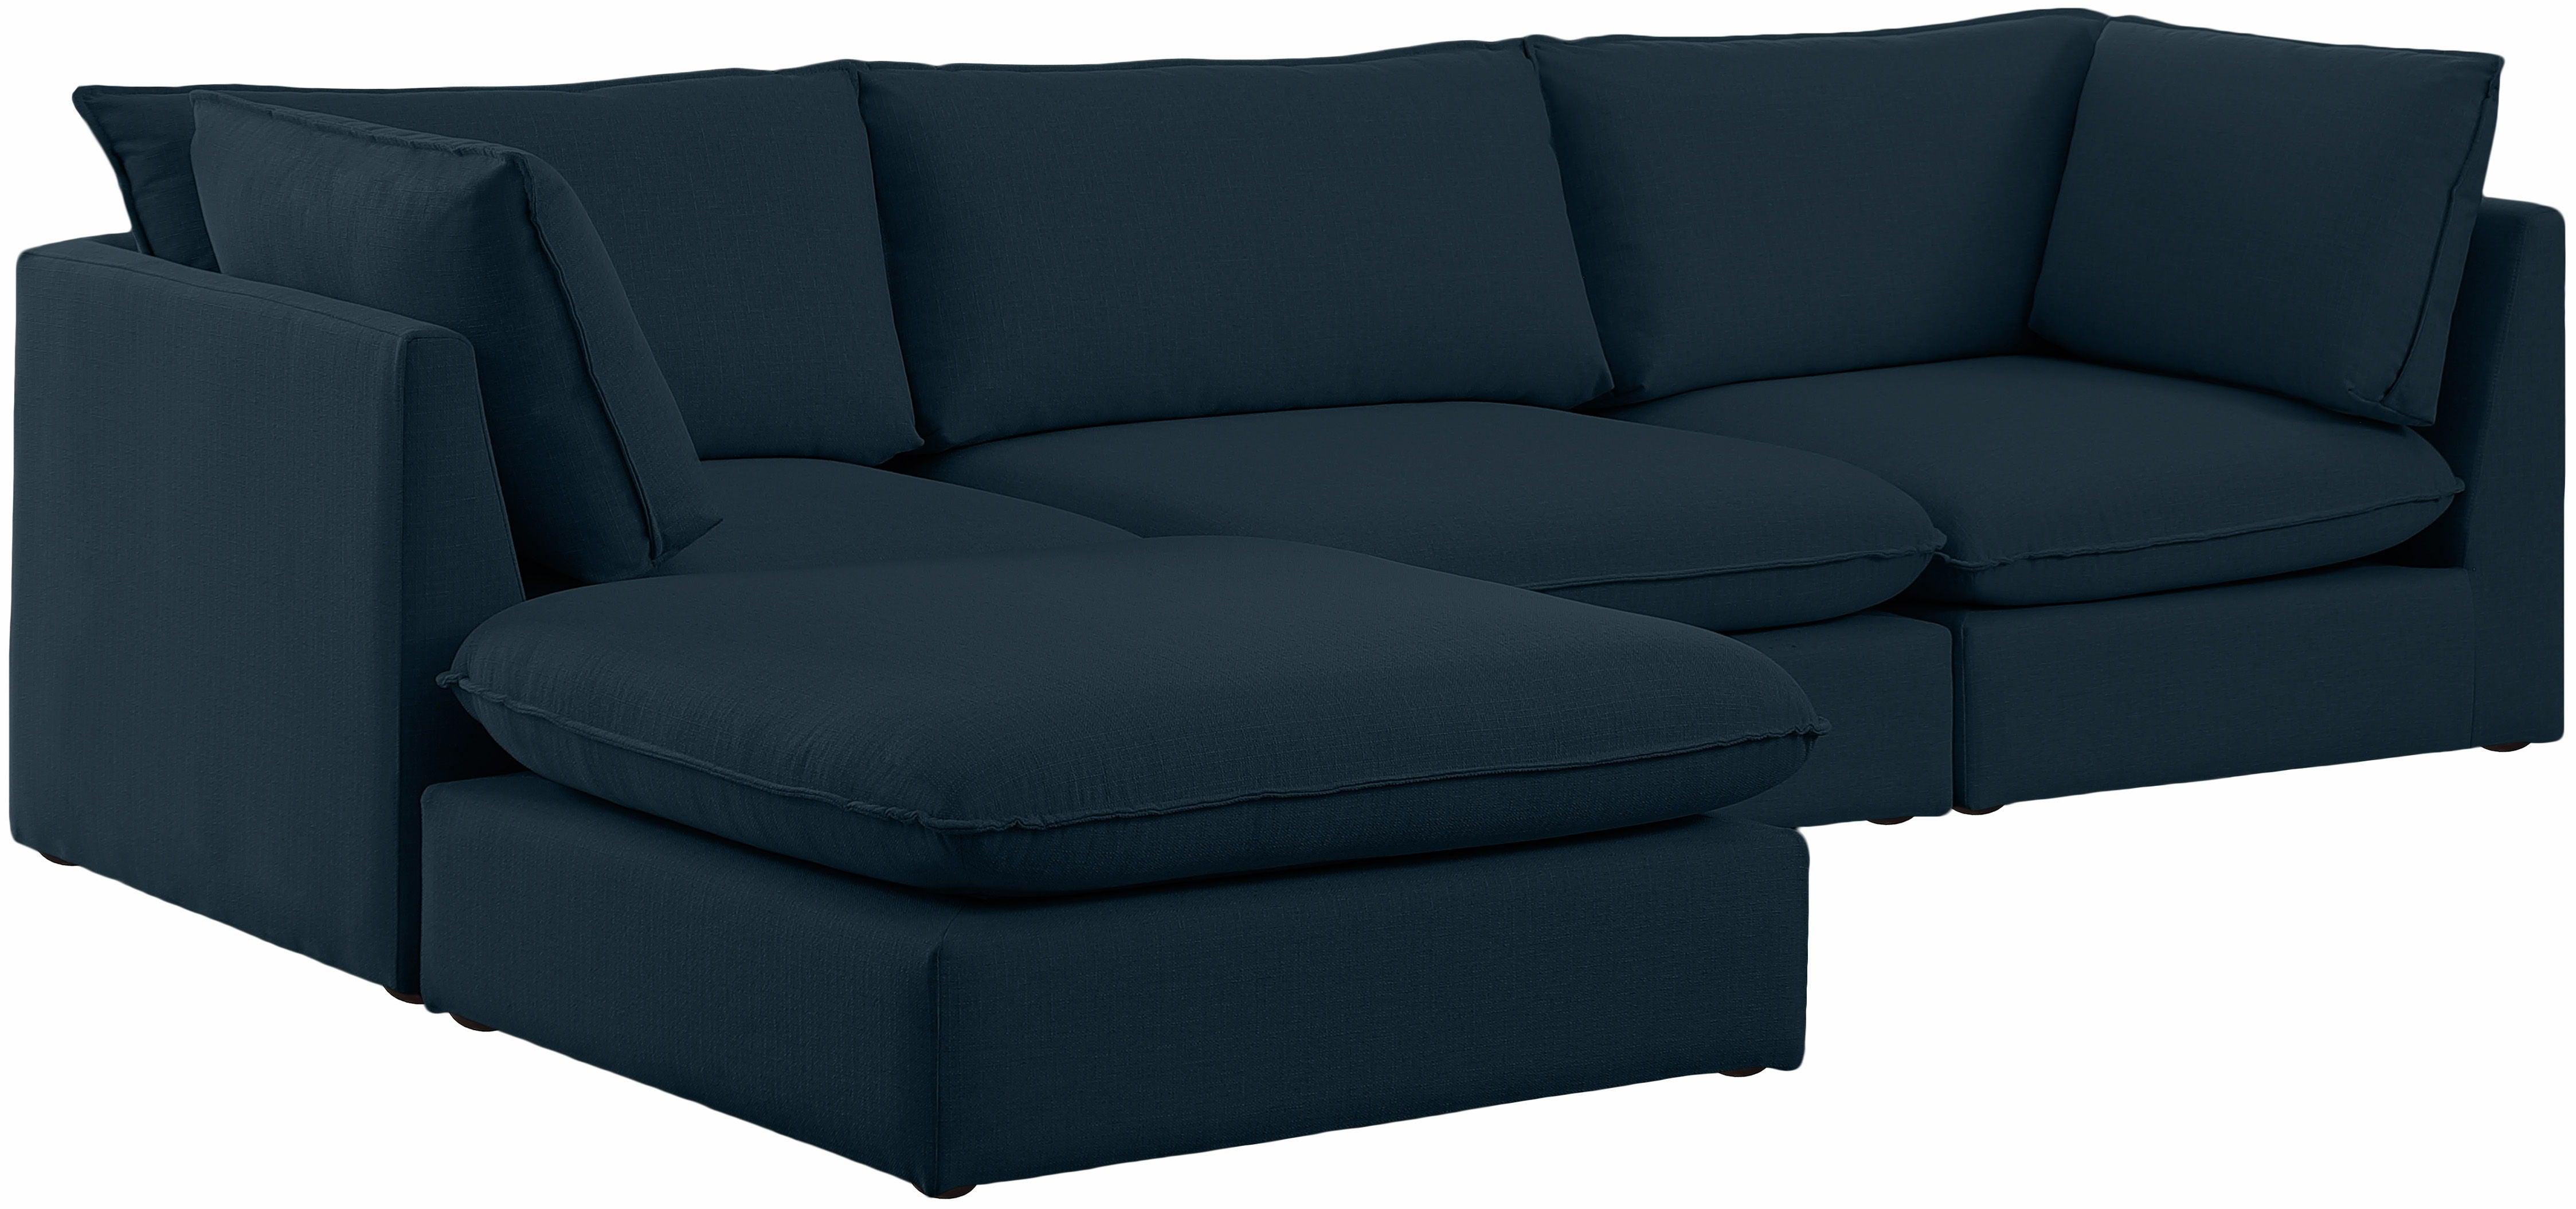 Meridian Furniture - Mackenzie - Modular Sectional 4 Piece - Navy - 5th Avenue Furniture